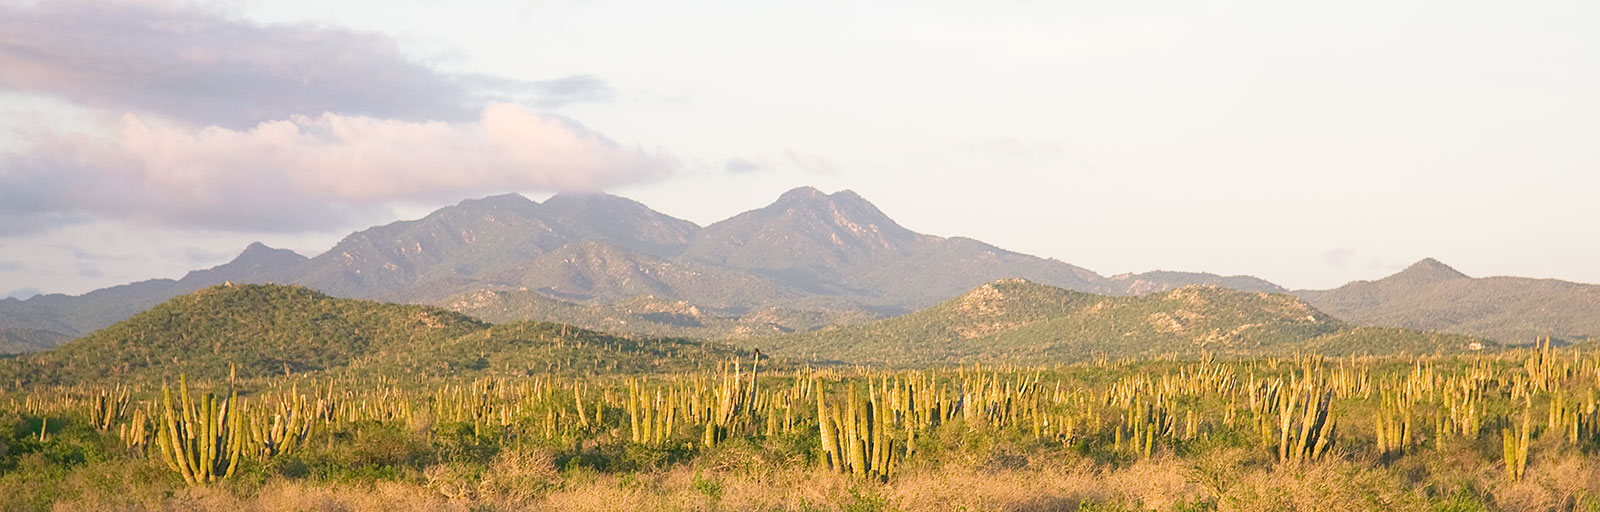 Baja Yoga Retreats in Mexico: Mountains & Desert